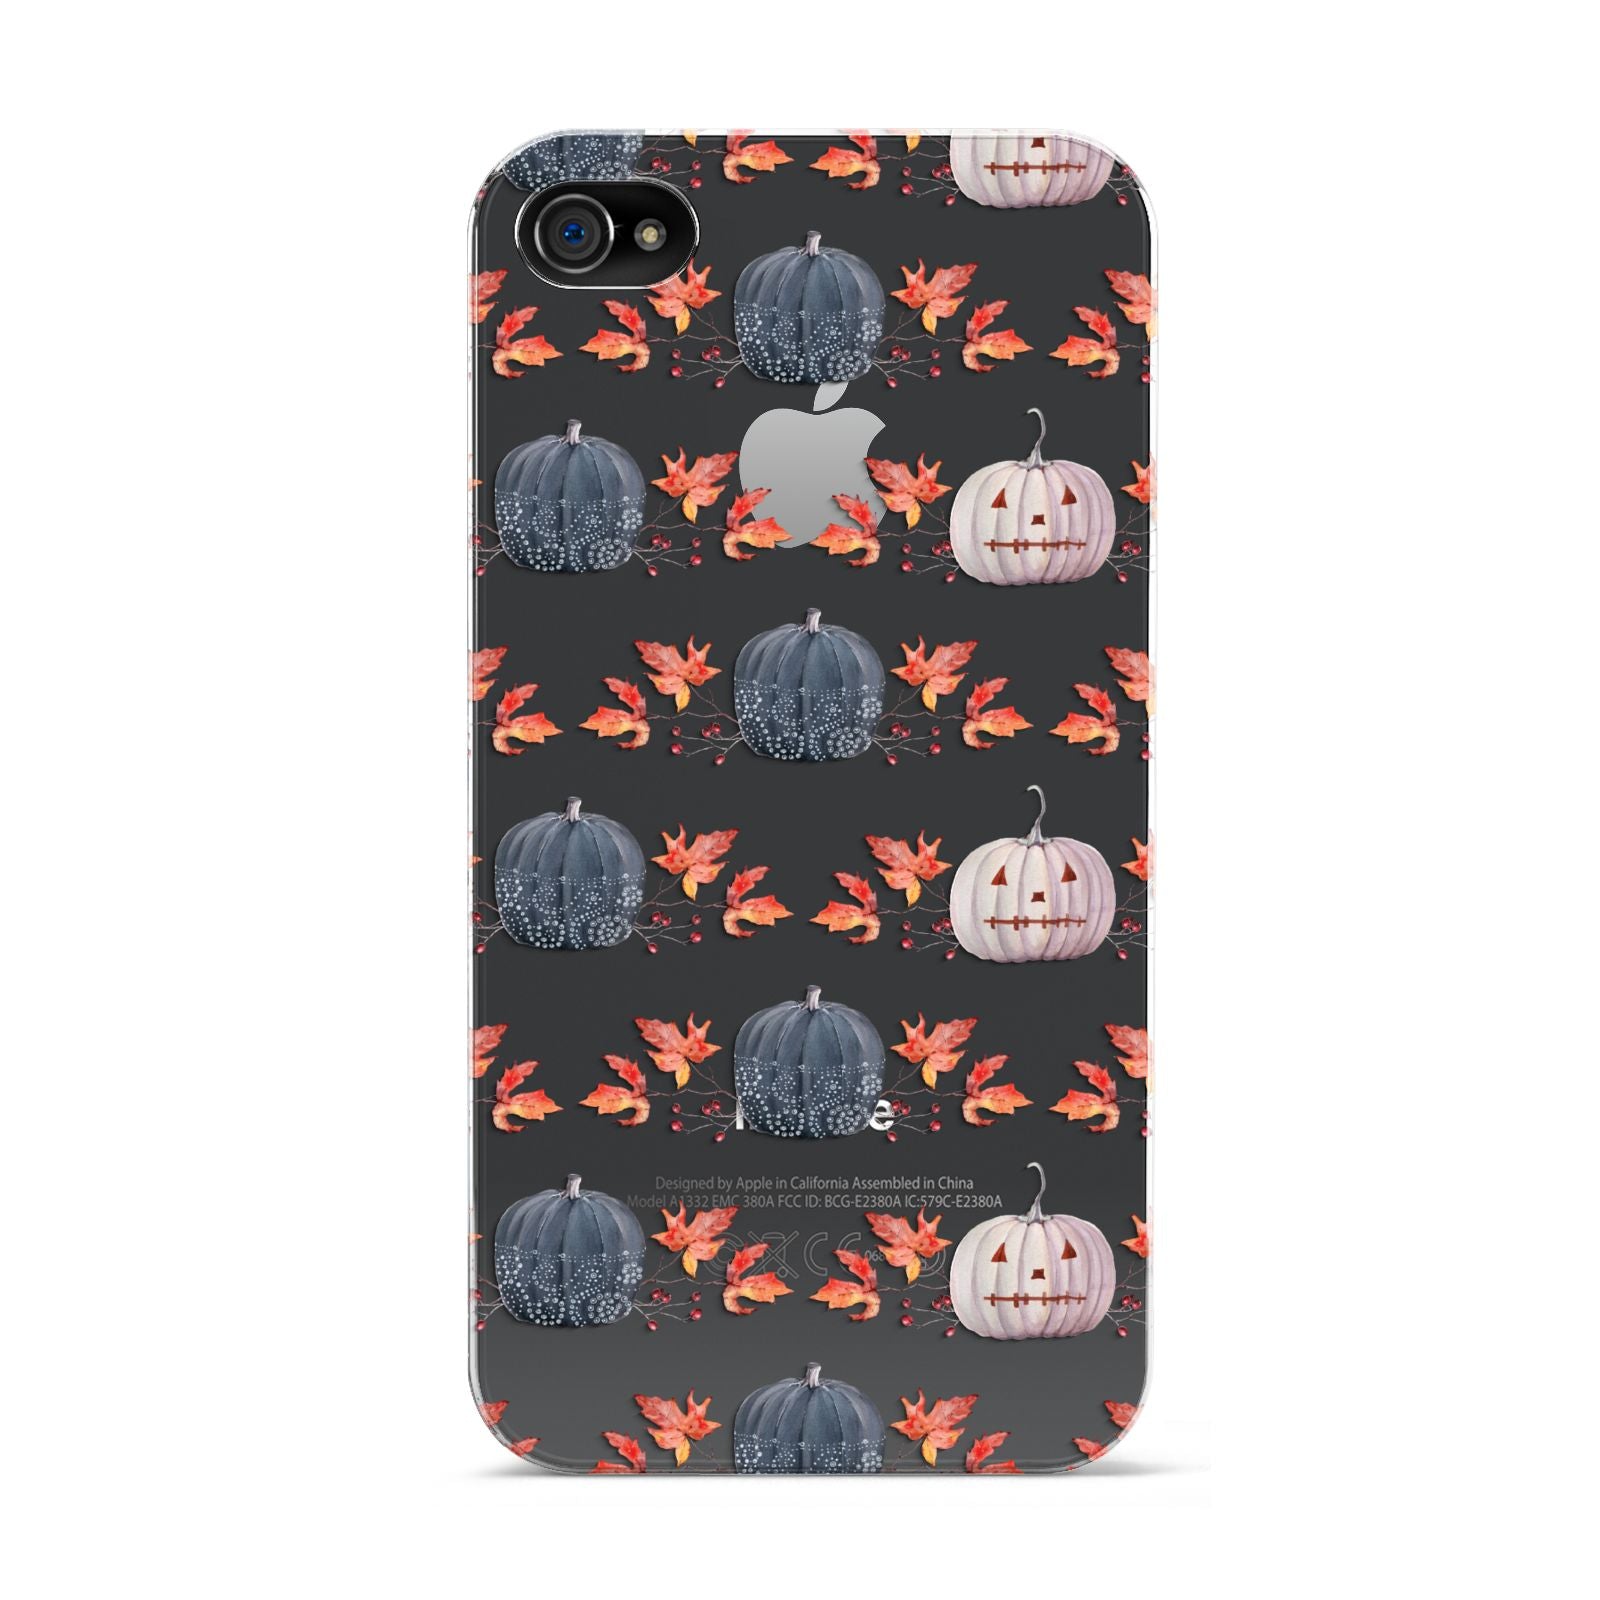 Pumpkin Autumn Leaves Apple iPhone 4s Case